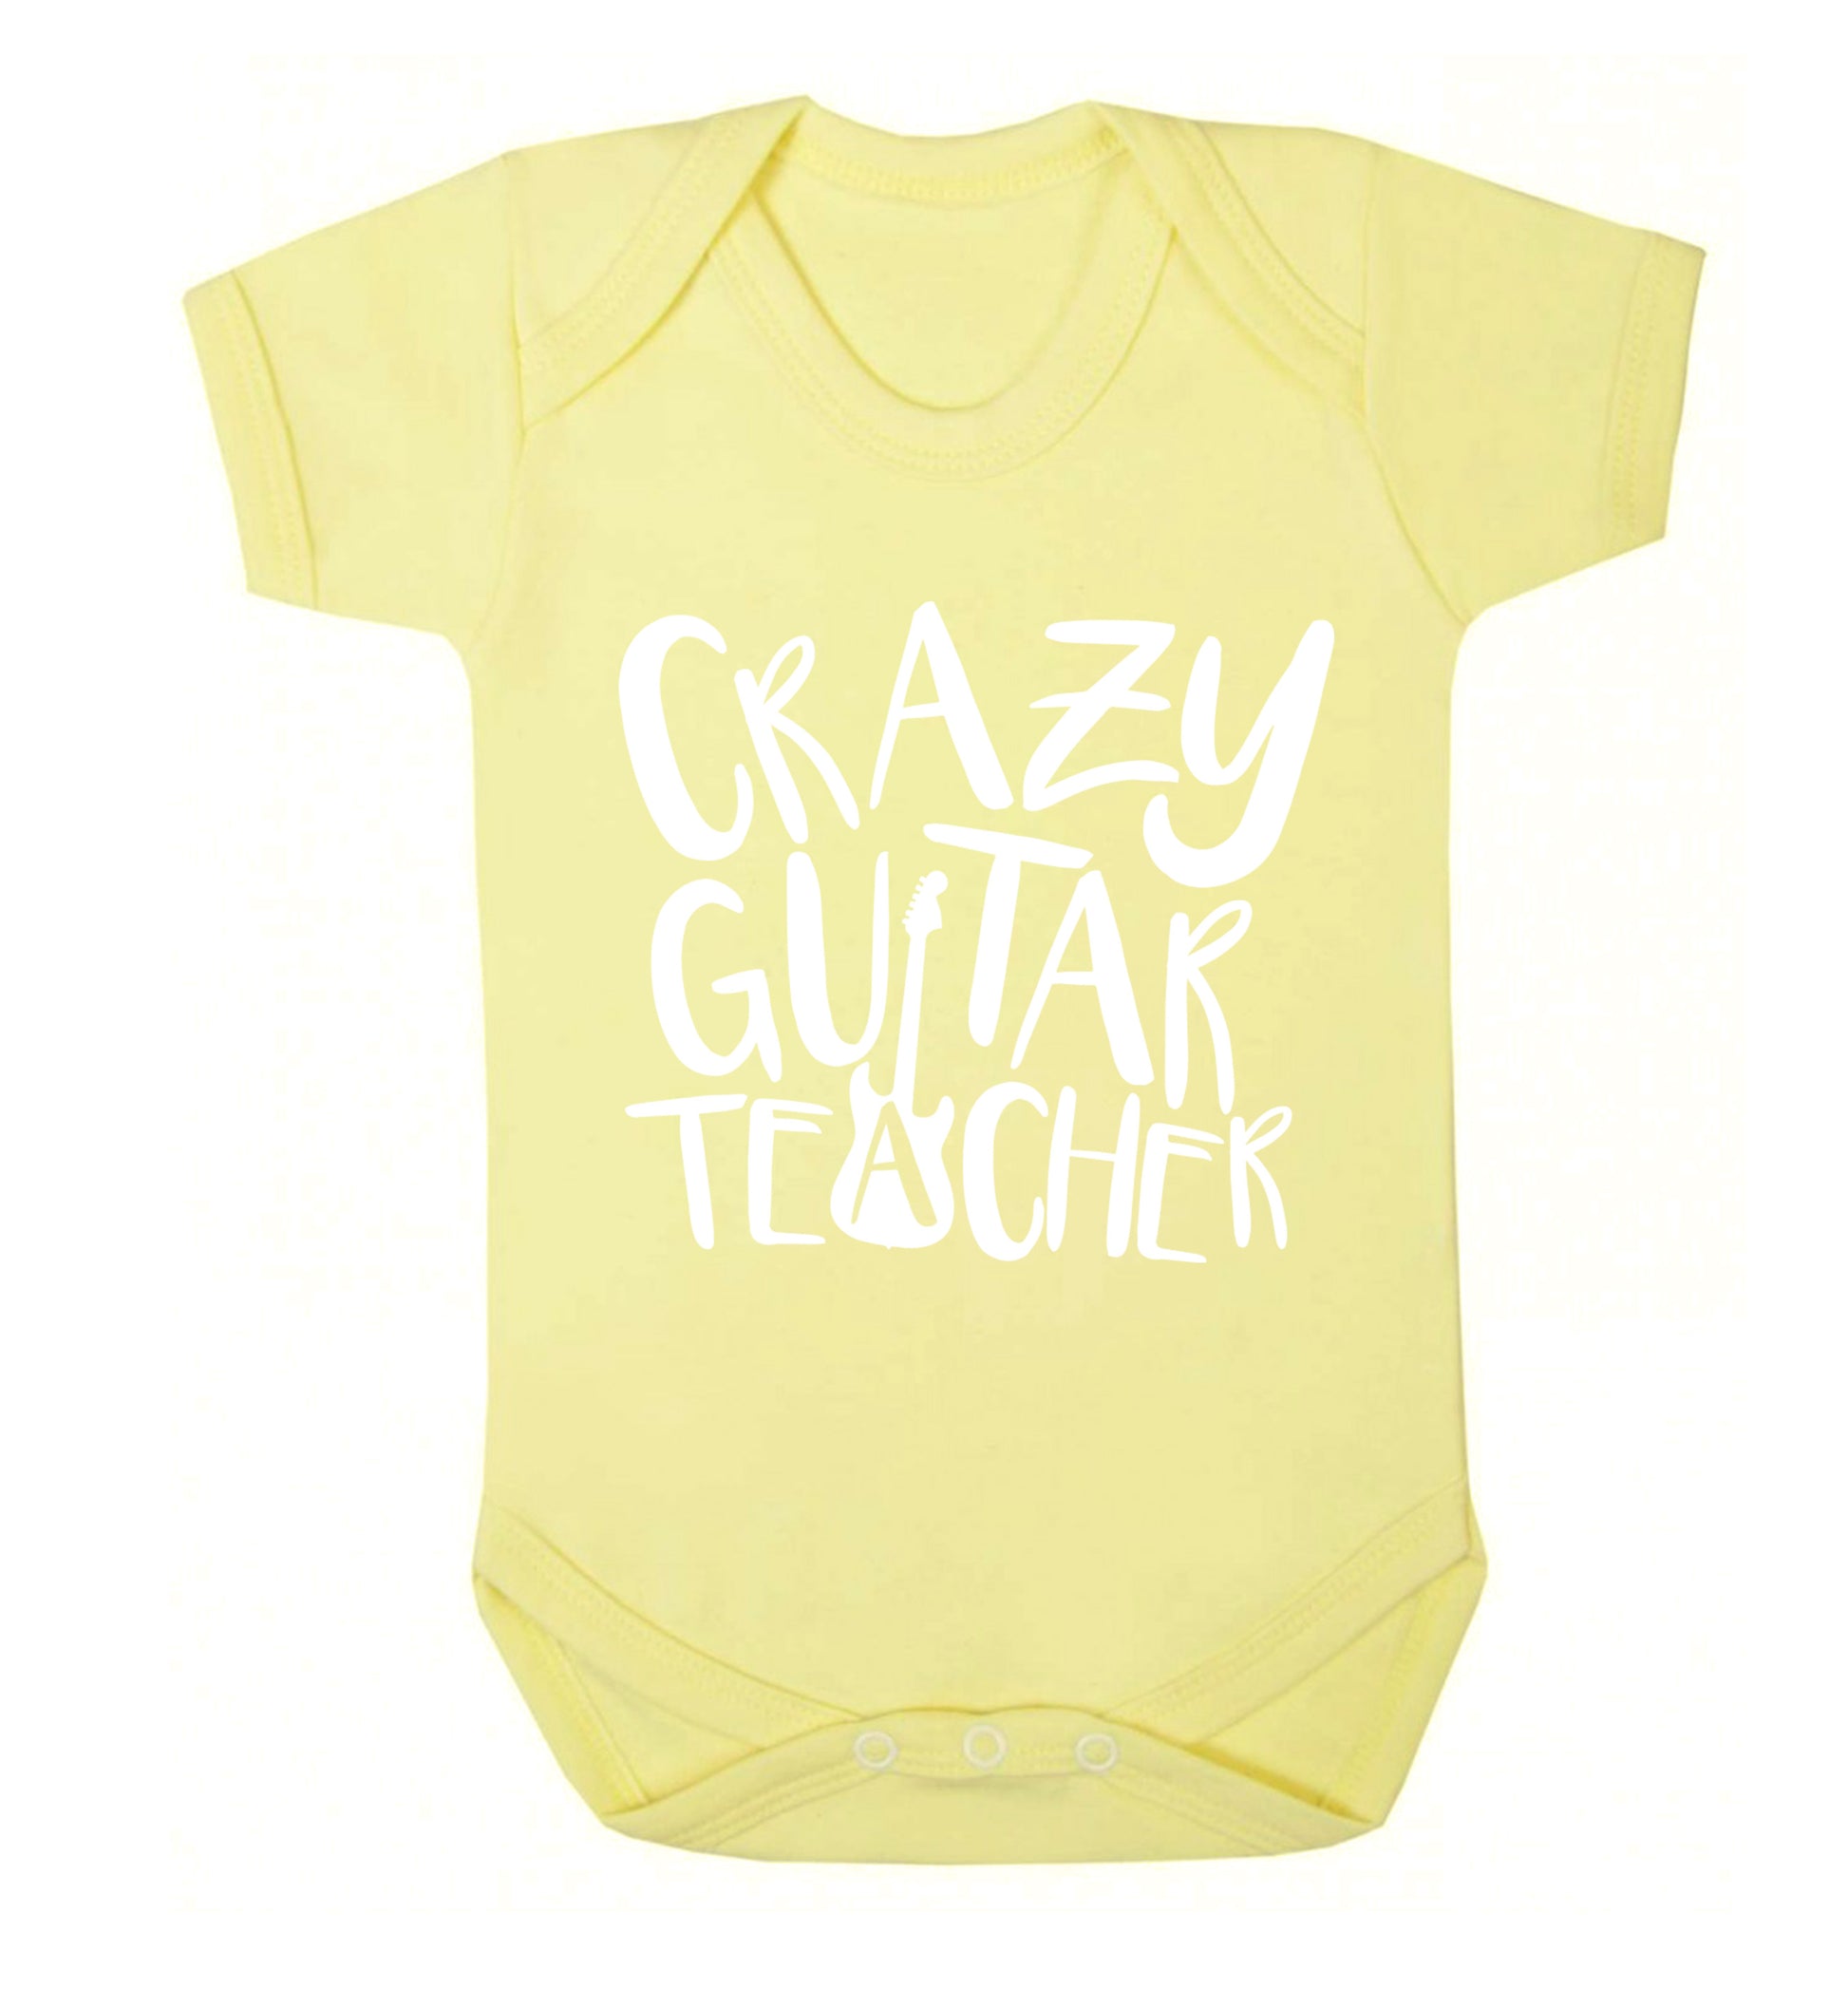 Crazy guitar teacher Baby Vest pale yellow 18-24 months